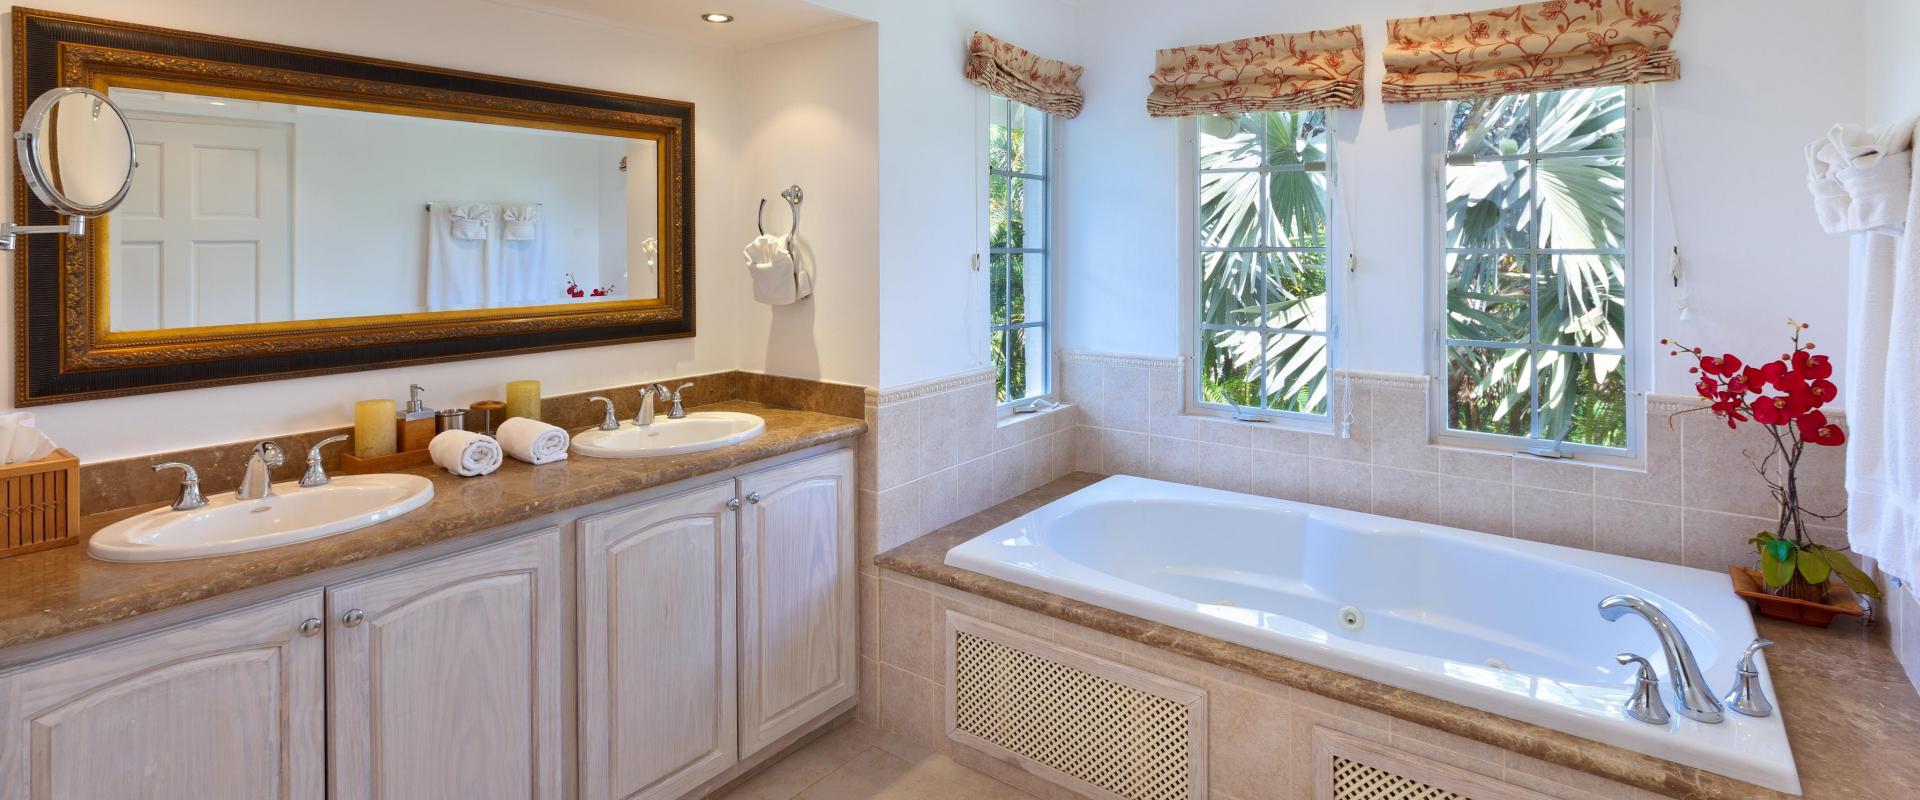 Barbados Holiday Rental Rose Of Sharon Sandy Lane Bathroom 2